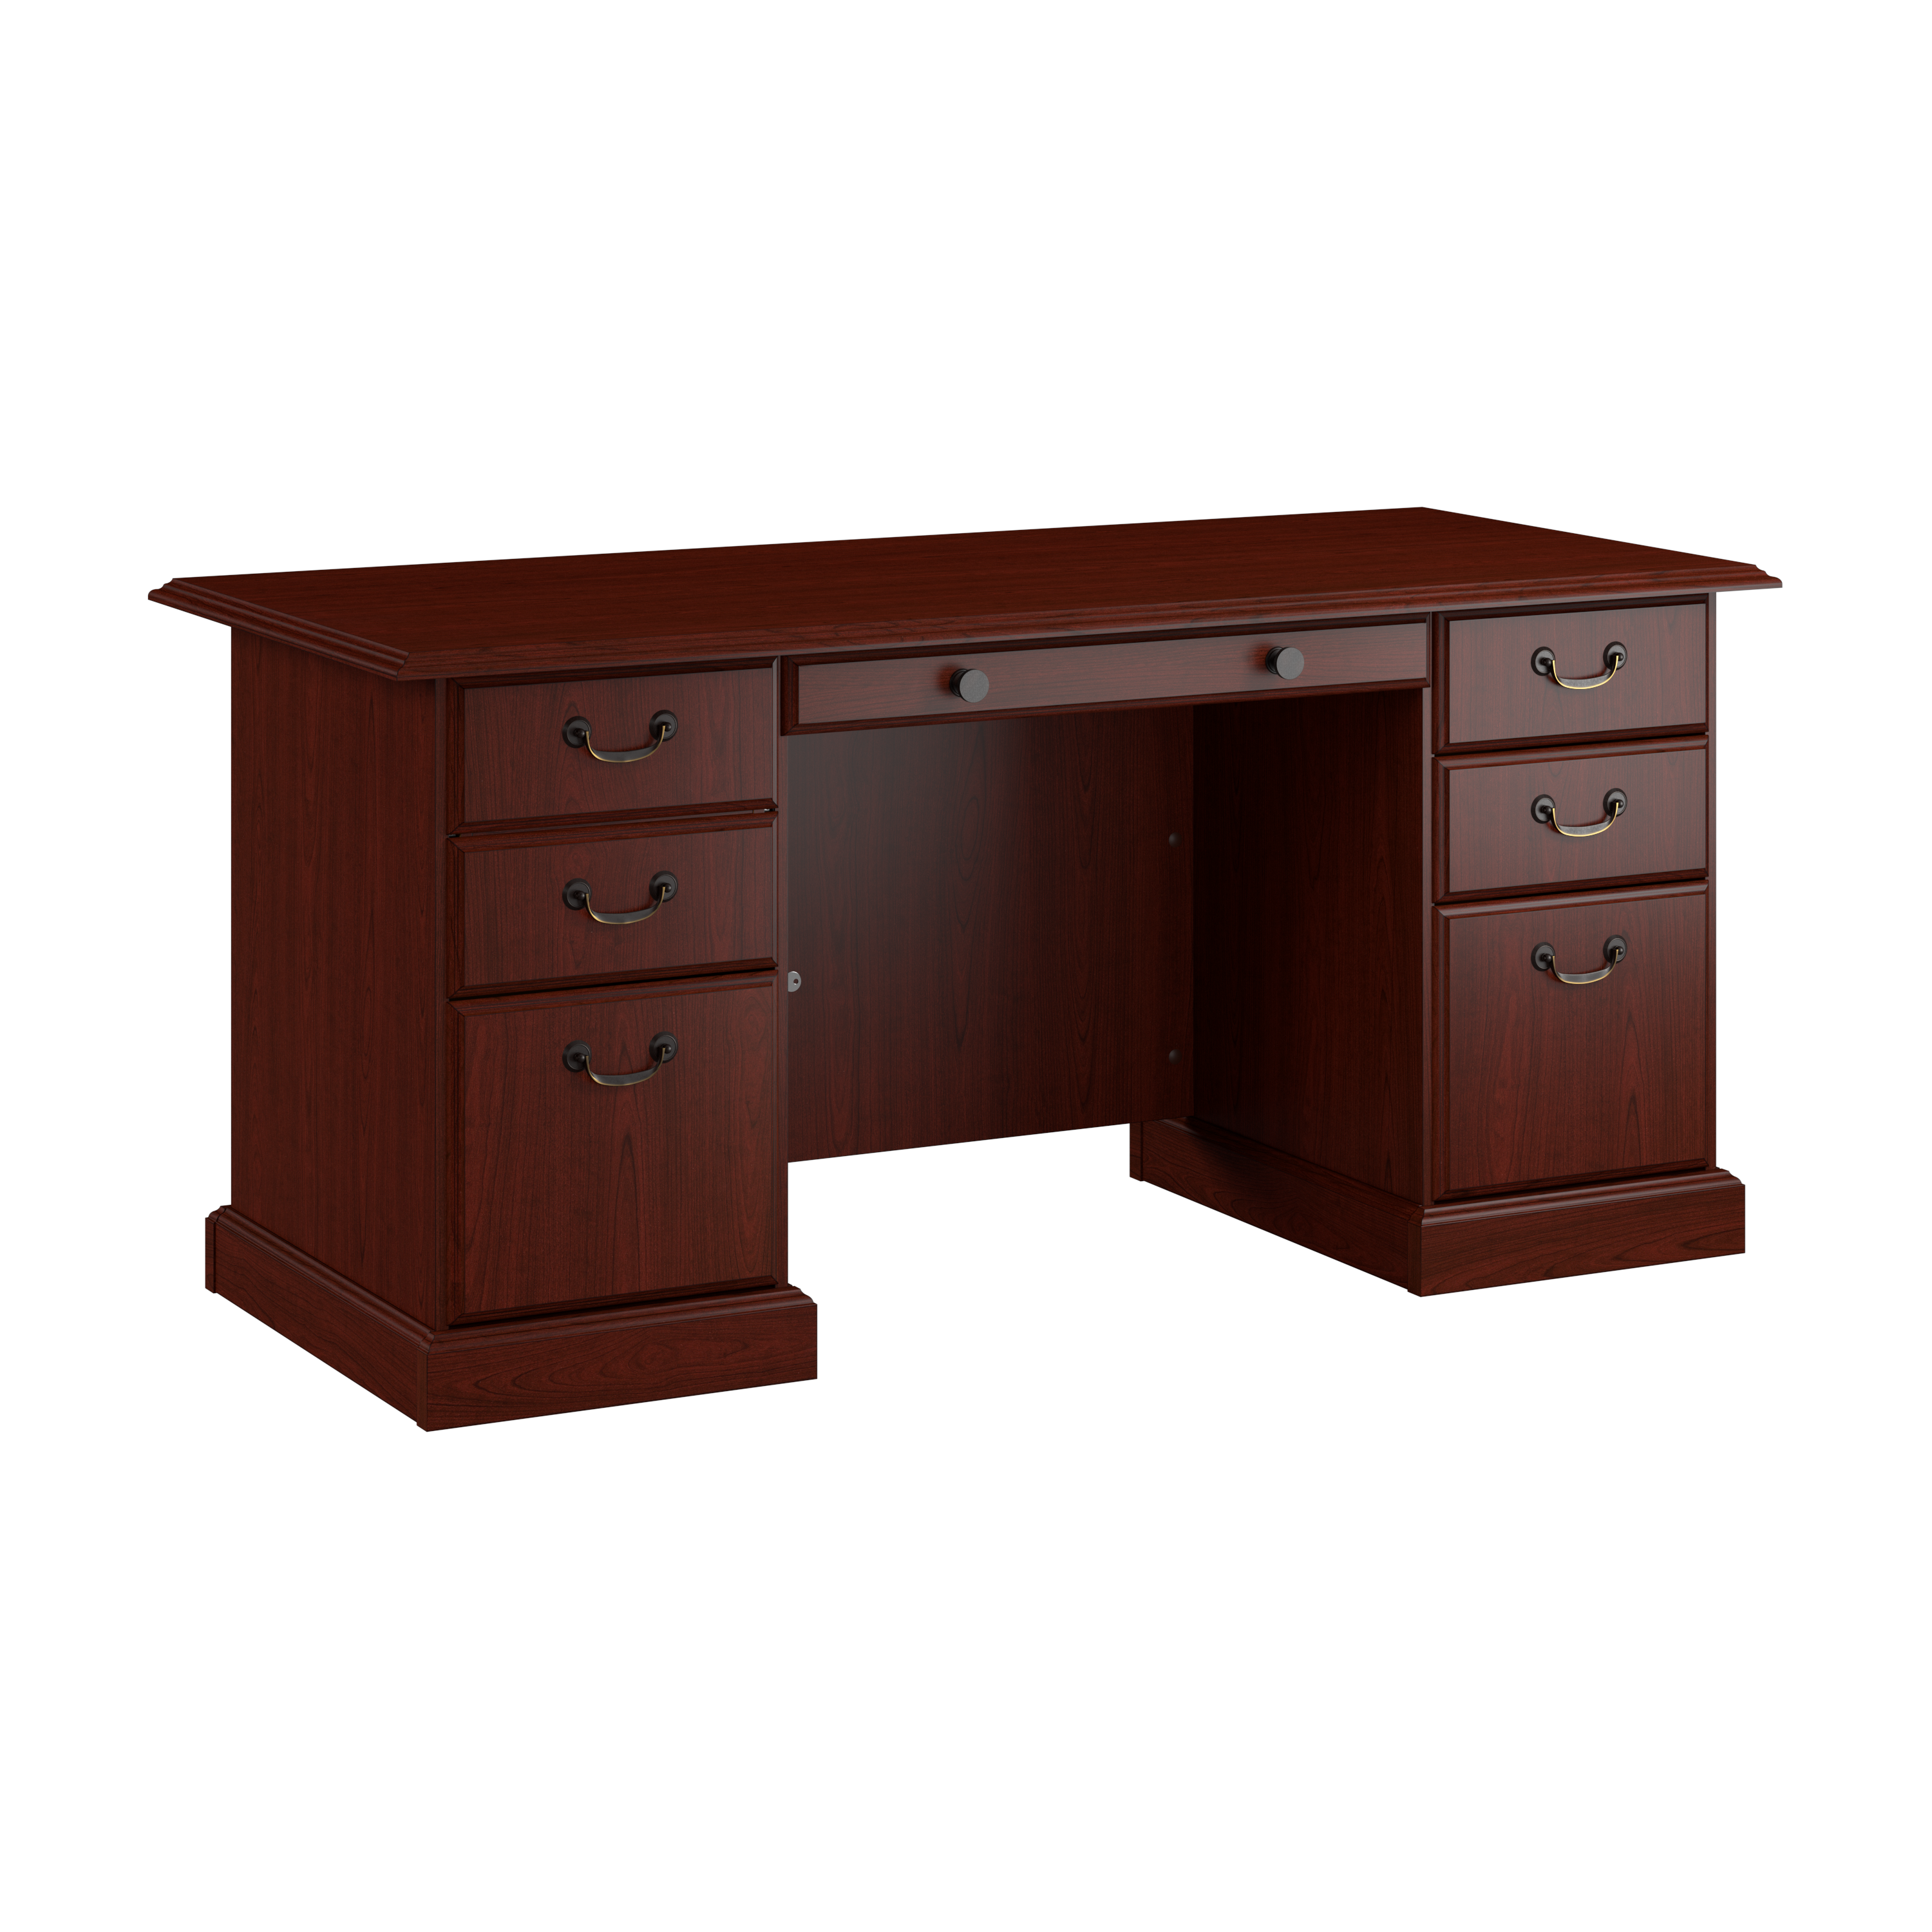 Shop Bush Business Furniture Arlington Executive Desk with Drawers 02 WC65566-03K #color_harvest cherry